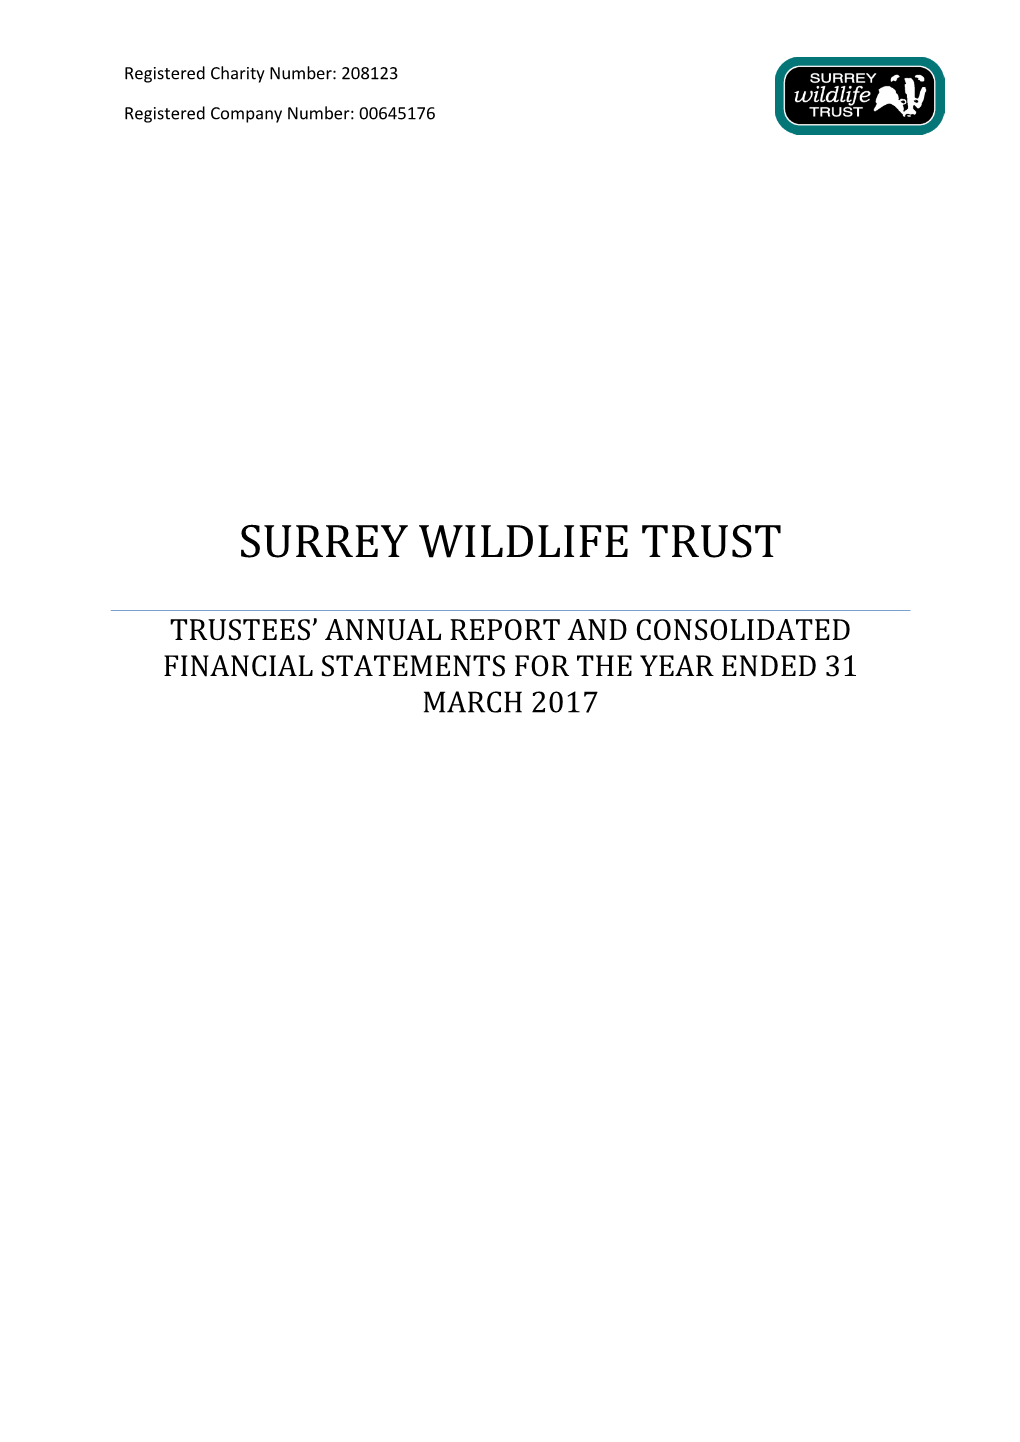 Surrey Wildlife Trust Report and Accounts 2016-17